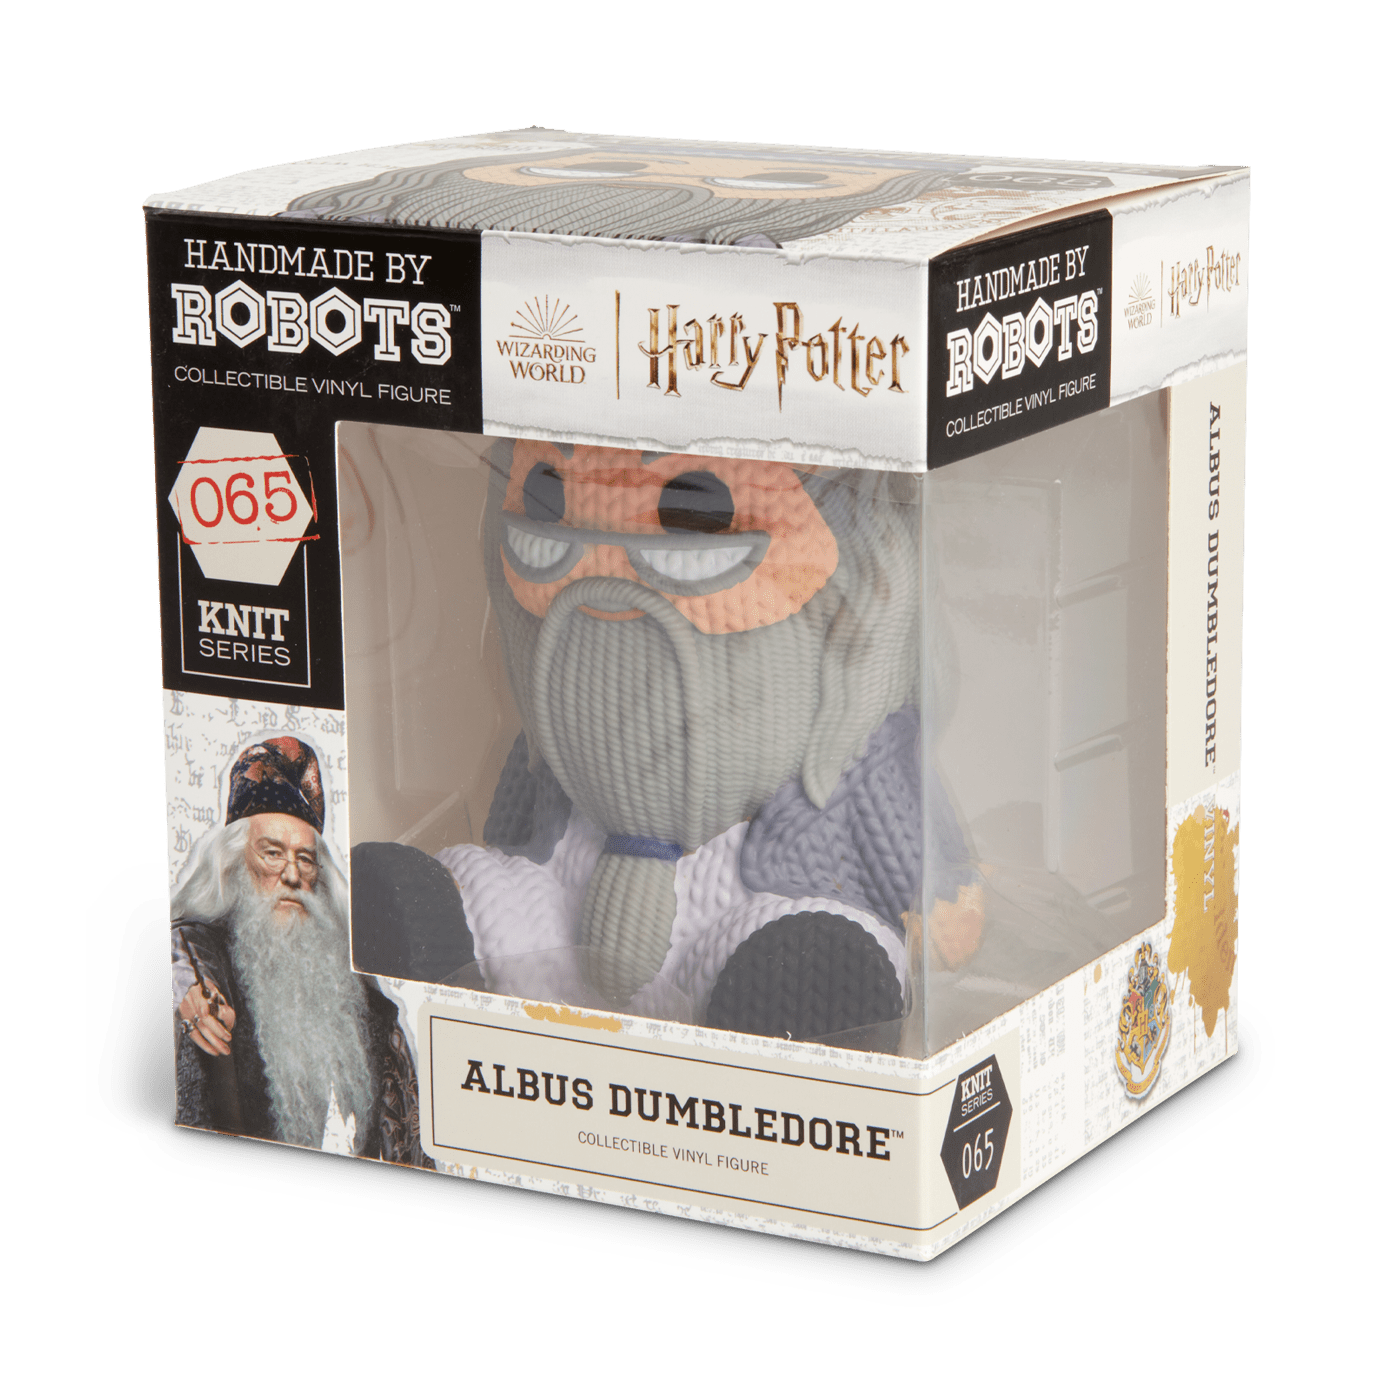 Albus Dumbledore #065 - Harry Potter - Handmade by Robots